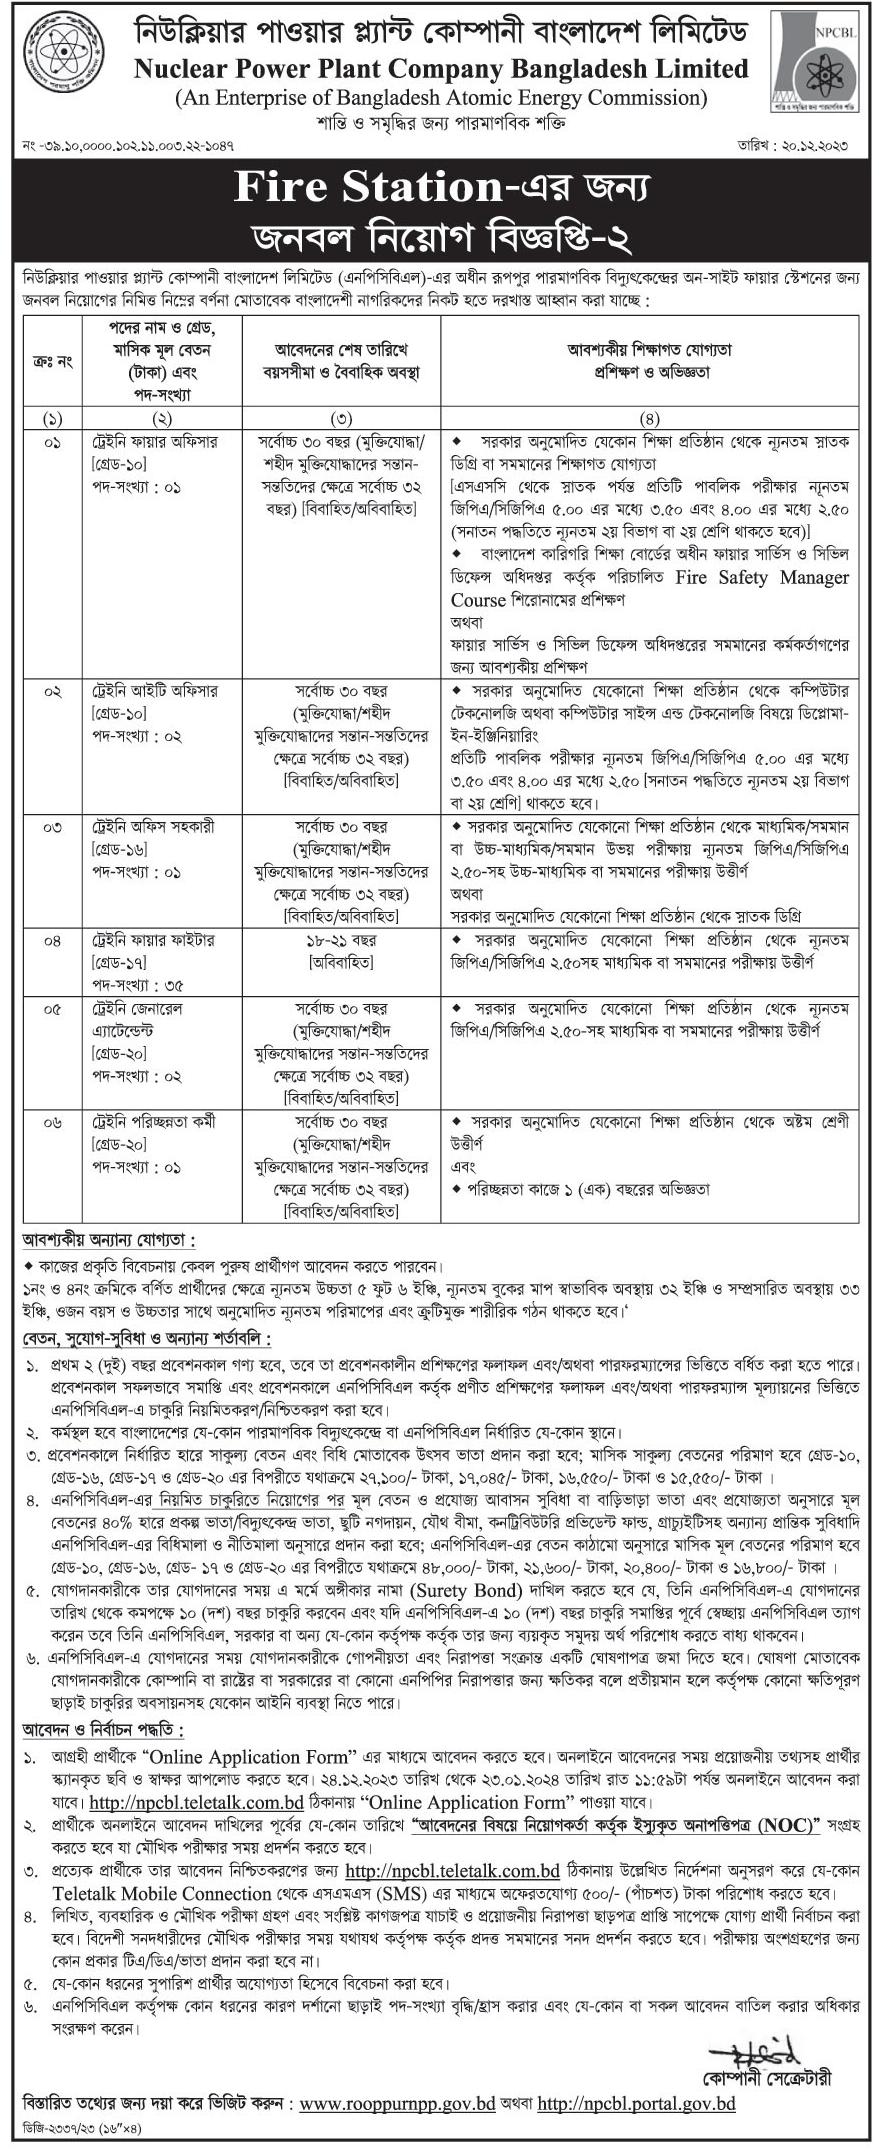 Nuclear Power Plant Company Bangladesh Limited, NPCBL Job Circular